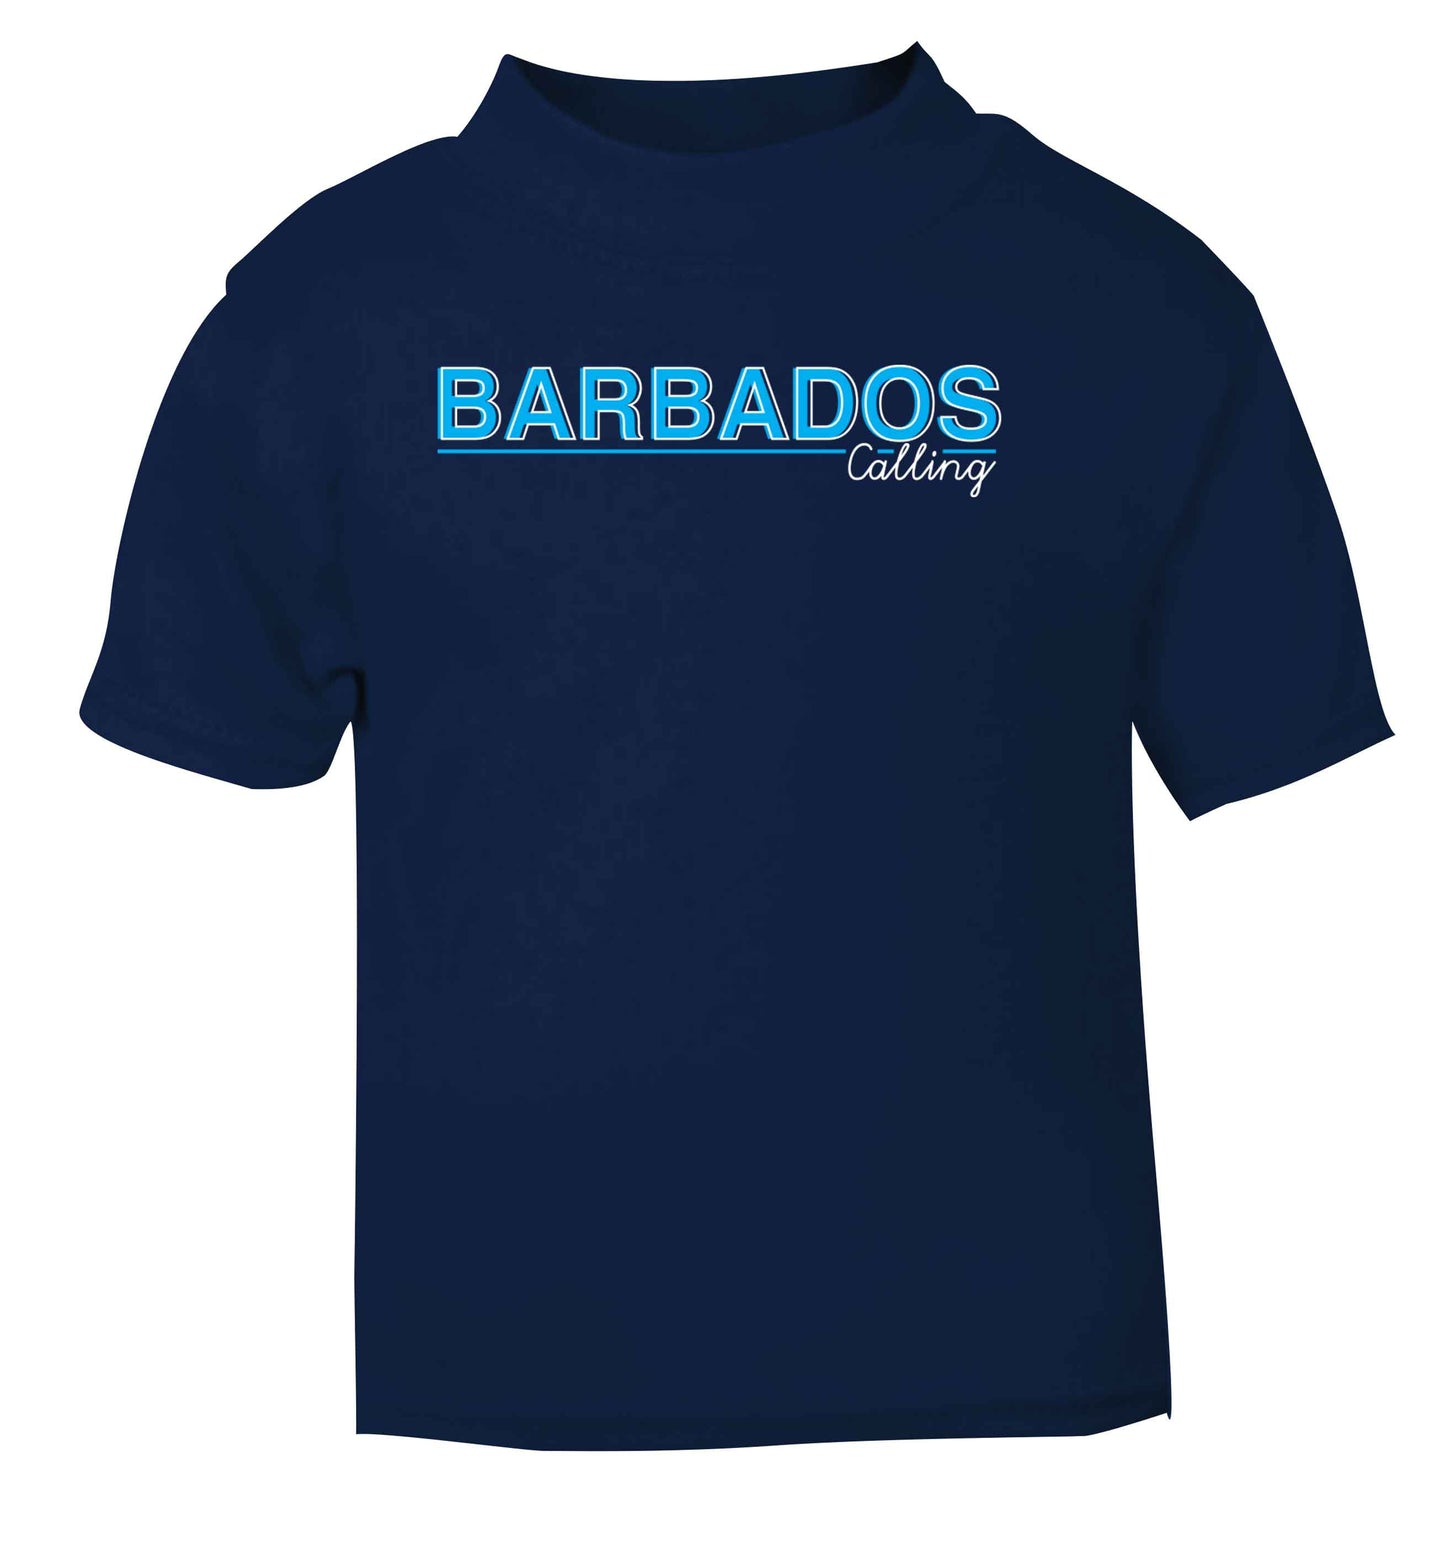 Barbados calling navy Baby Toddler Tshirt 2 Years